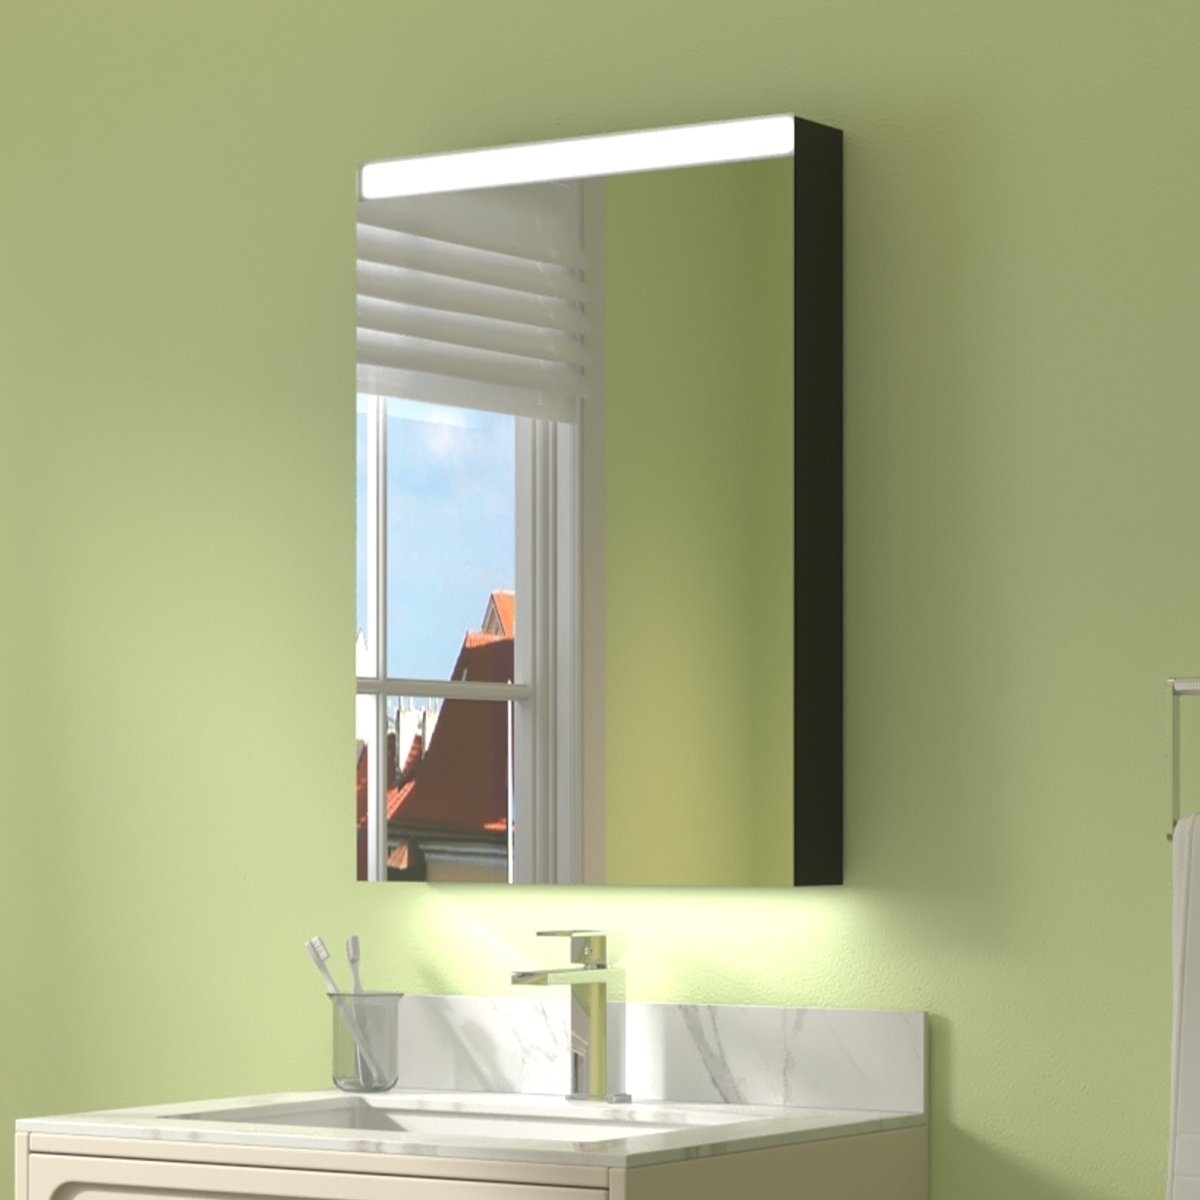 ExBrite 20 W X 30 H LED Bathroom Led Light Medicine Cabinet With Mirrors - Hinge On Left Side